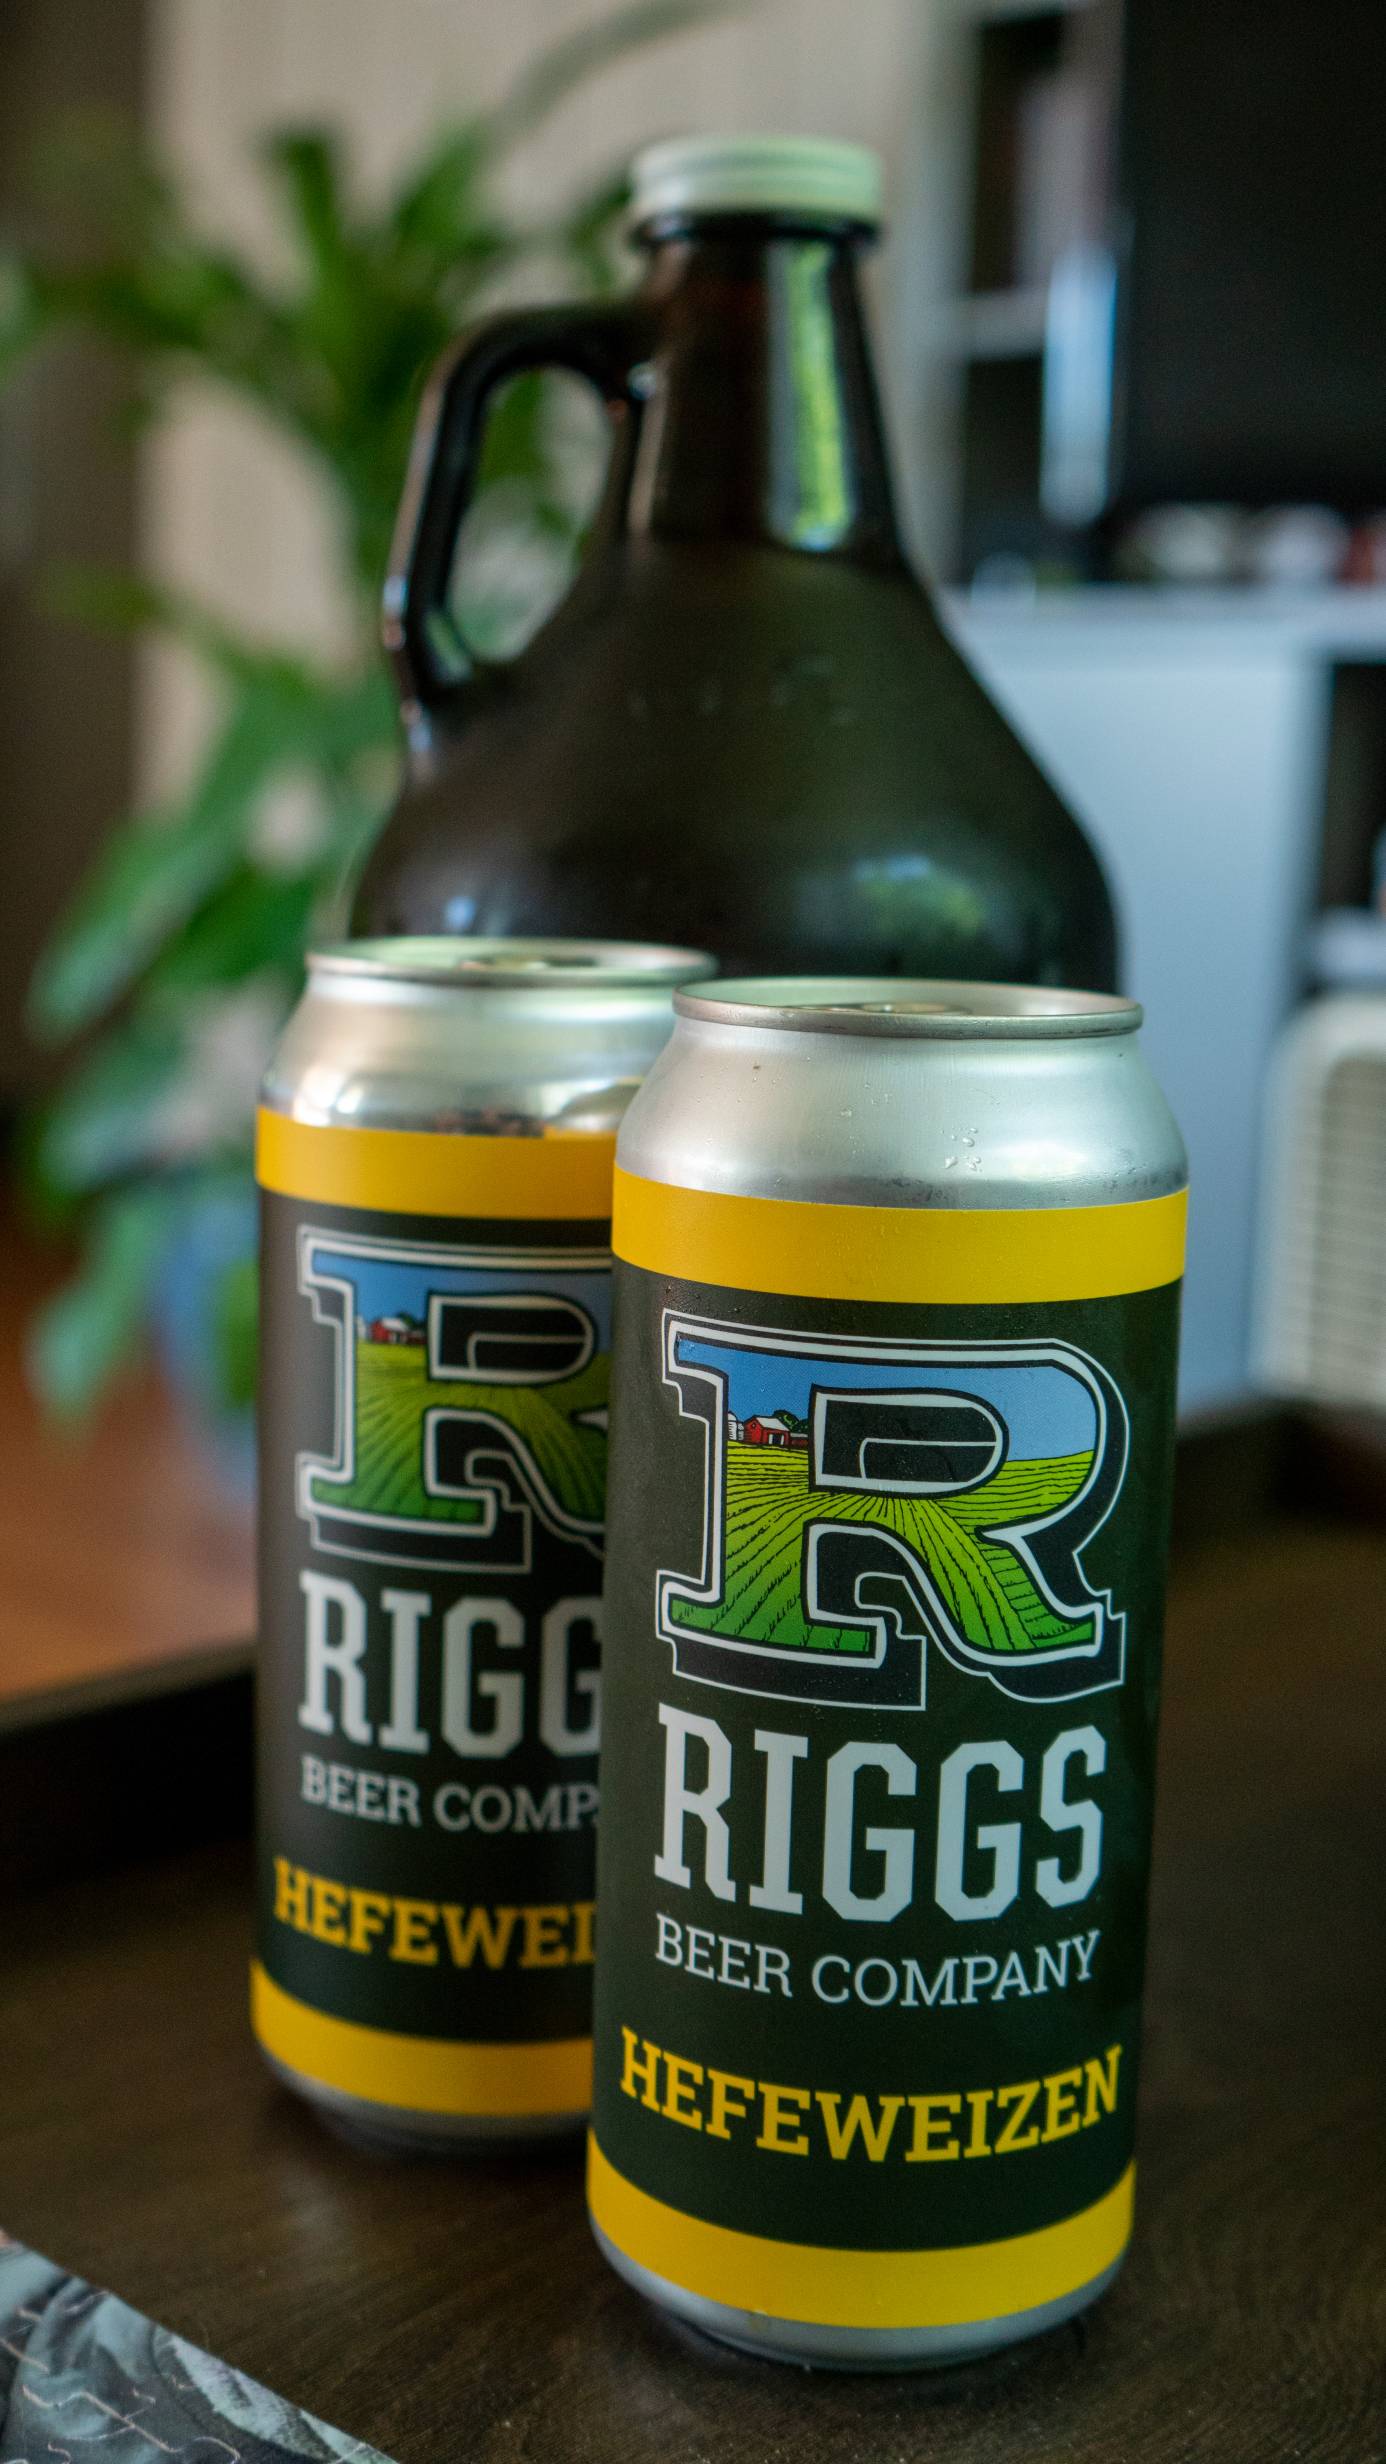 Two cans of Riggs Heffeweissen beer. Photo by Jordan Goebig.